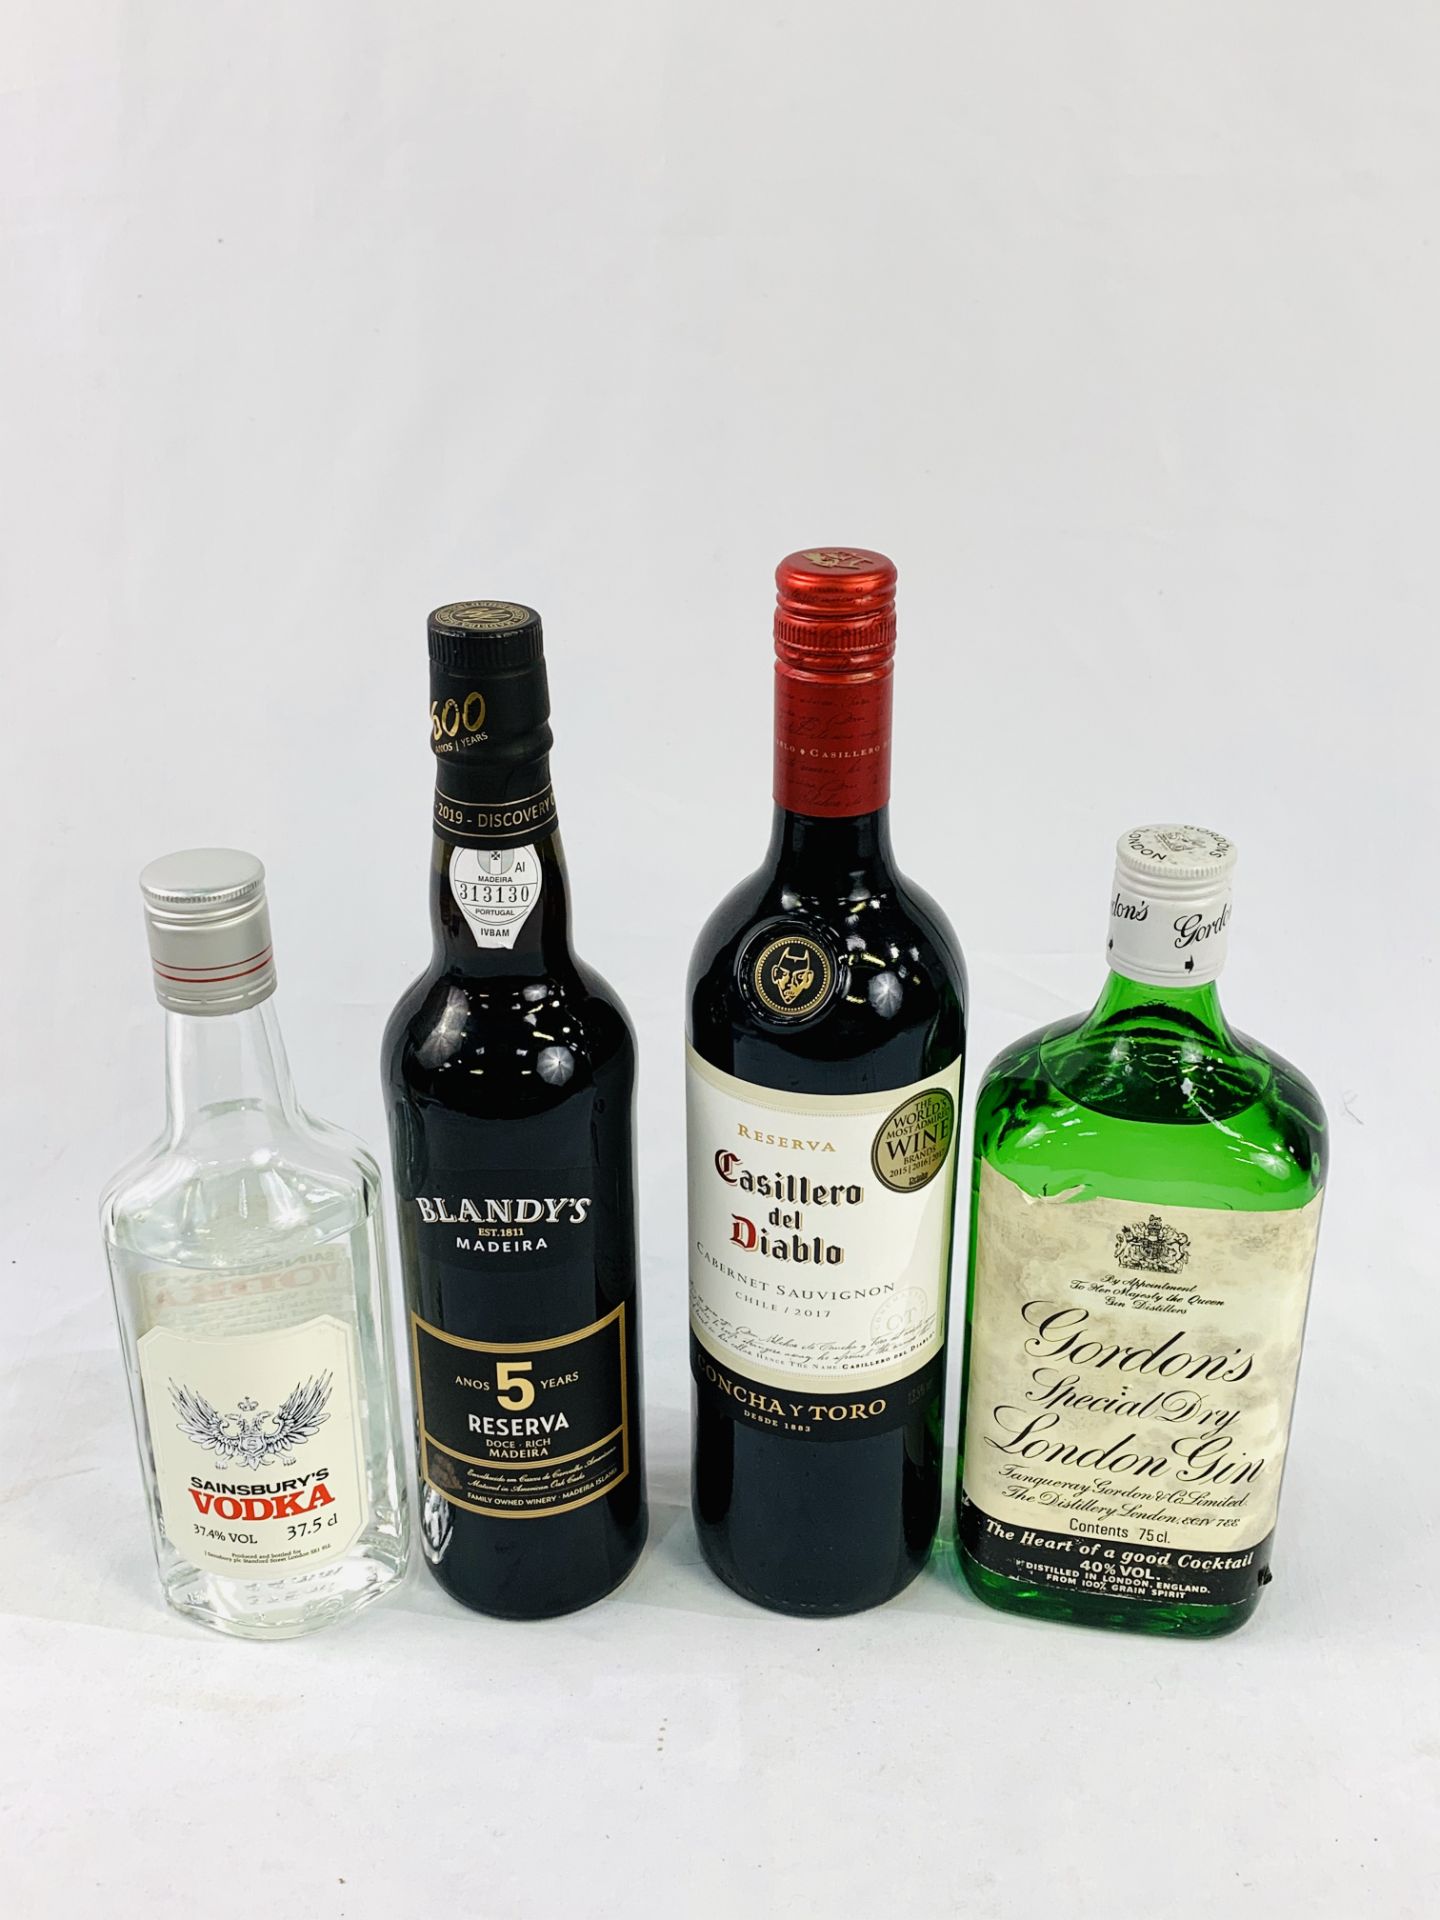 Blandy's 5 year reserved Madeira wine; Cabernet Sauvignon 2017; Gordon's Special Dry Gin; Vodka